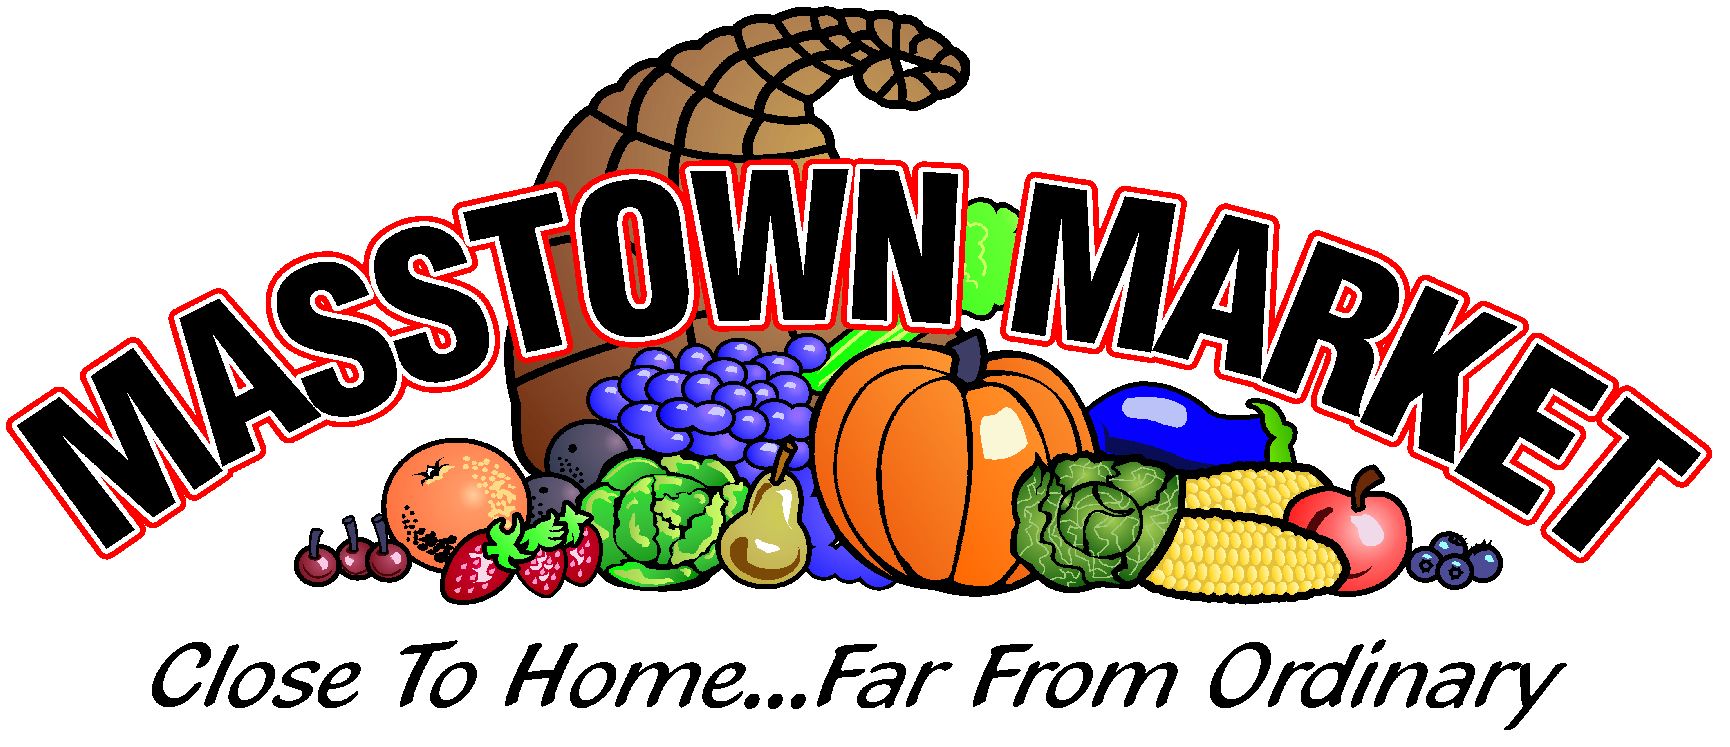 masstown market logo.jpg